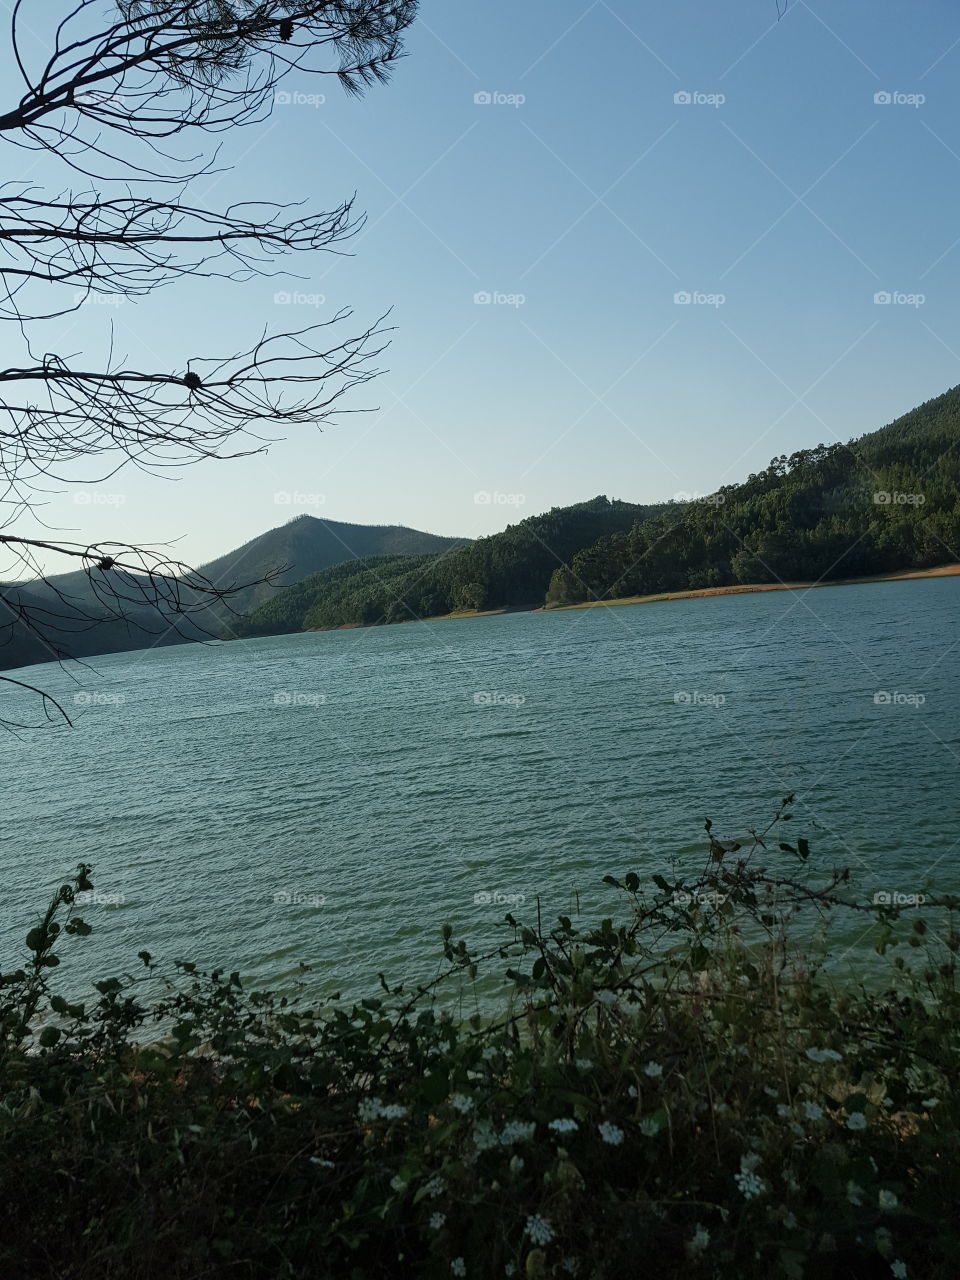 River "Lago Azul" - Ferreira do Zezere in PORTUGAL